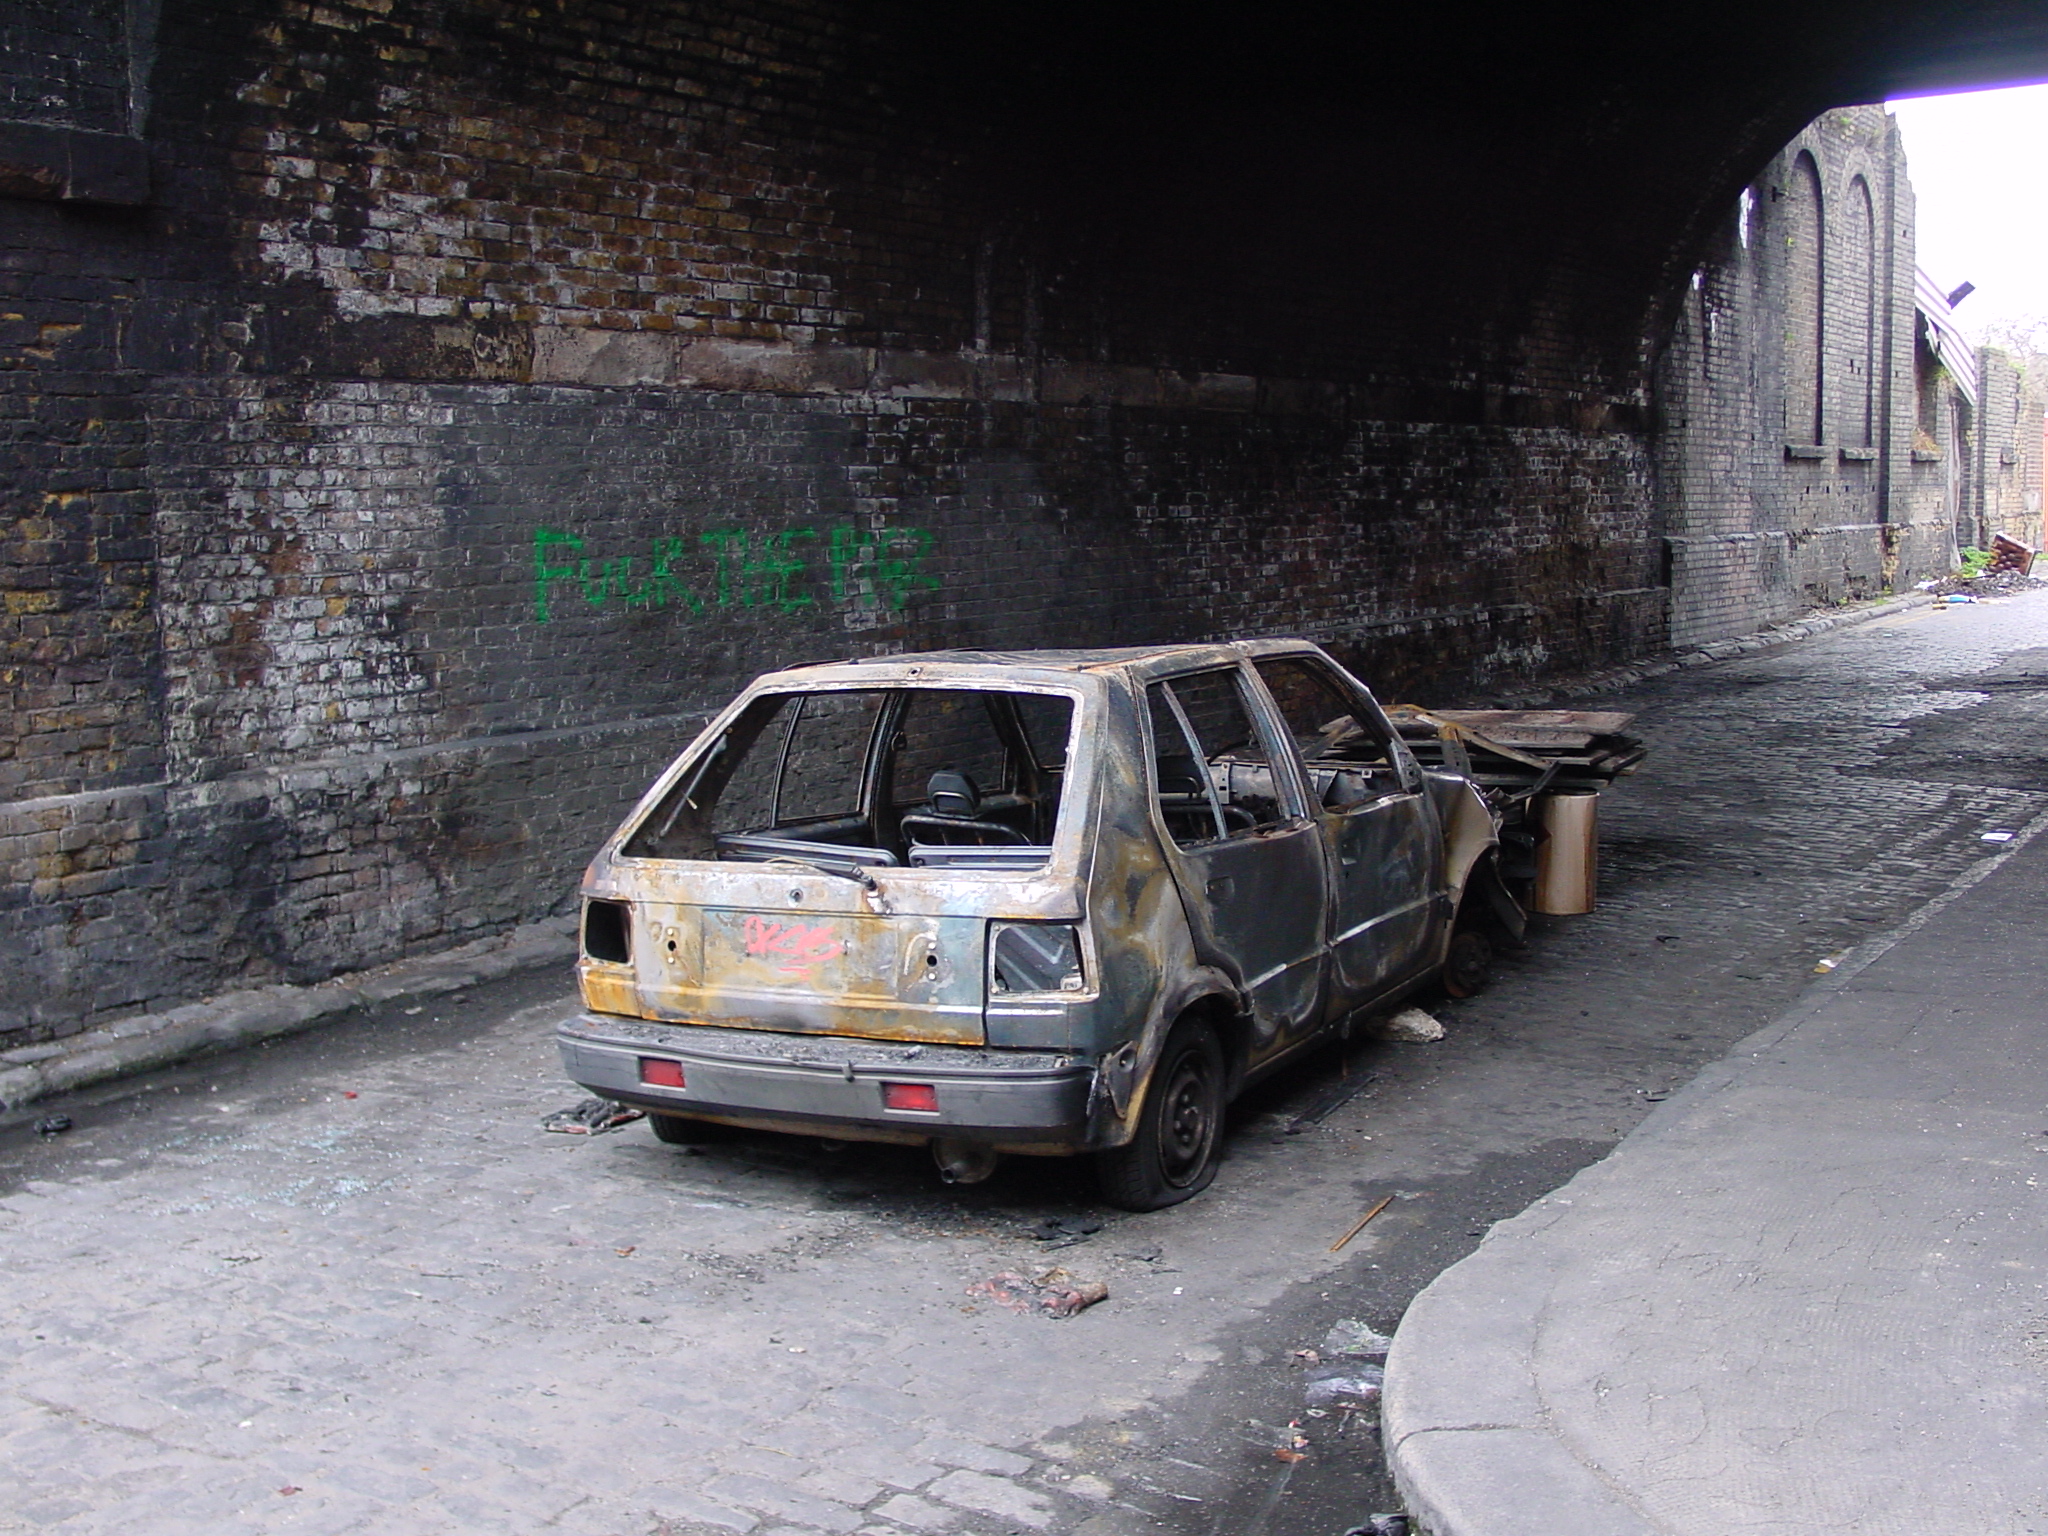 Burnt out car, off Pedley Street, 16 Apr 2001